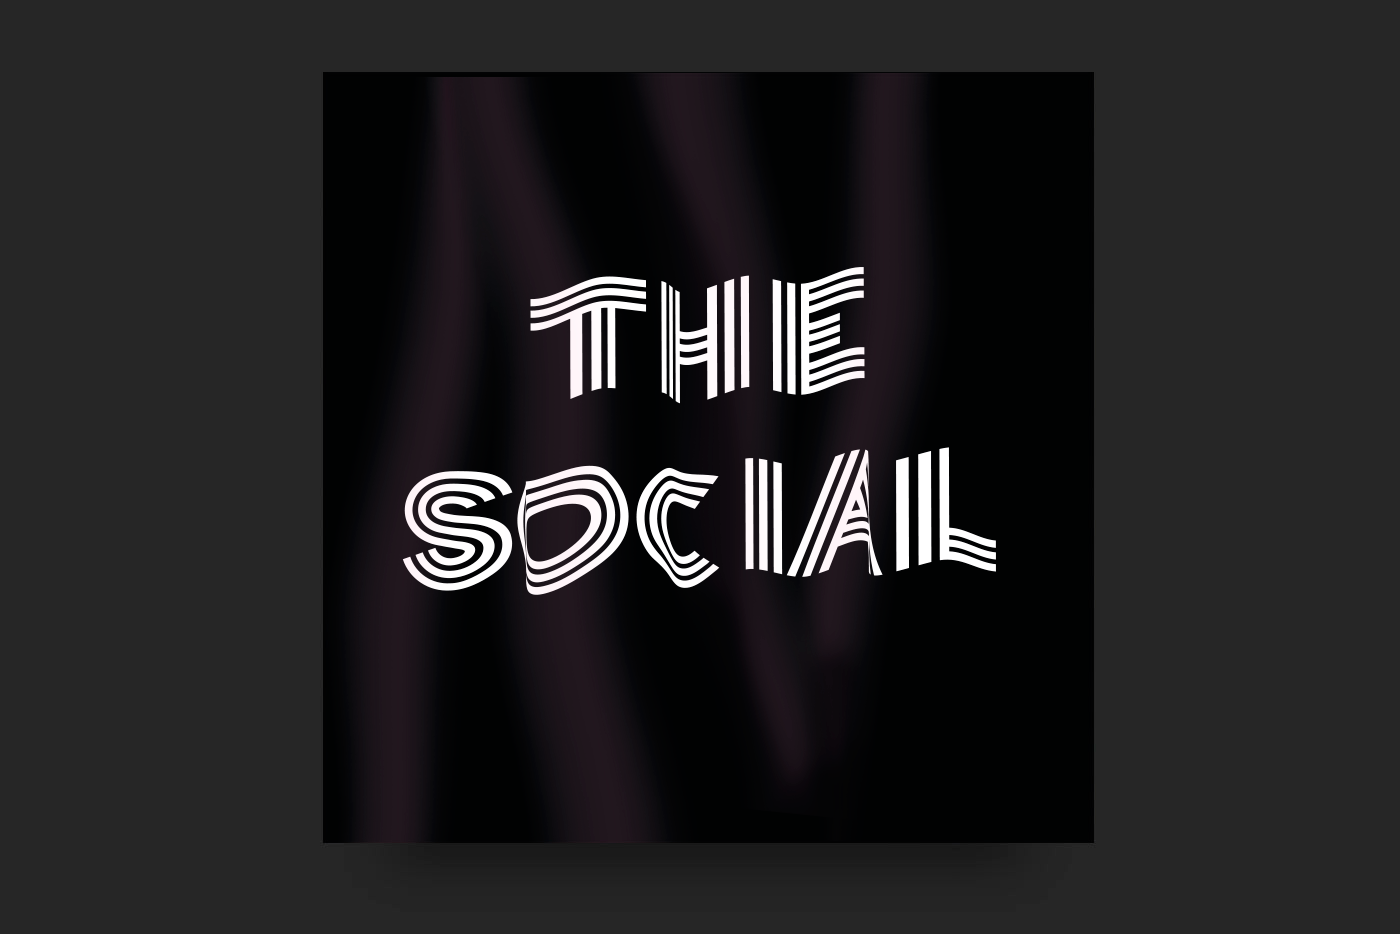 The Social 